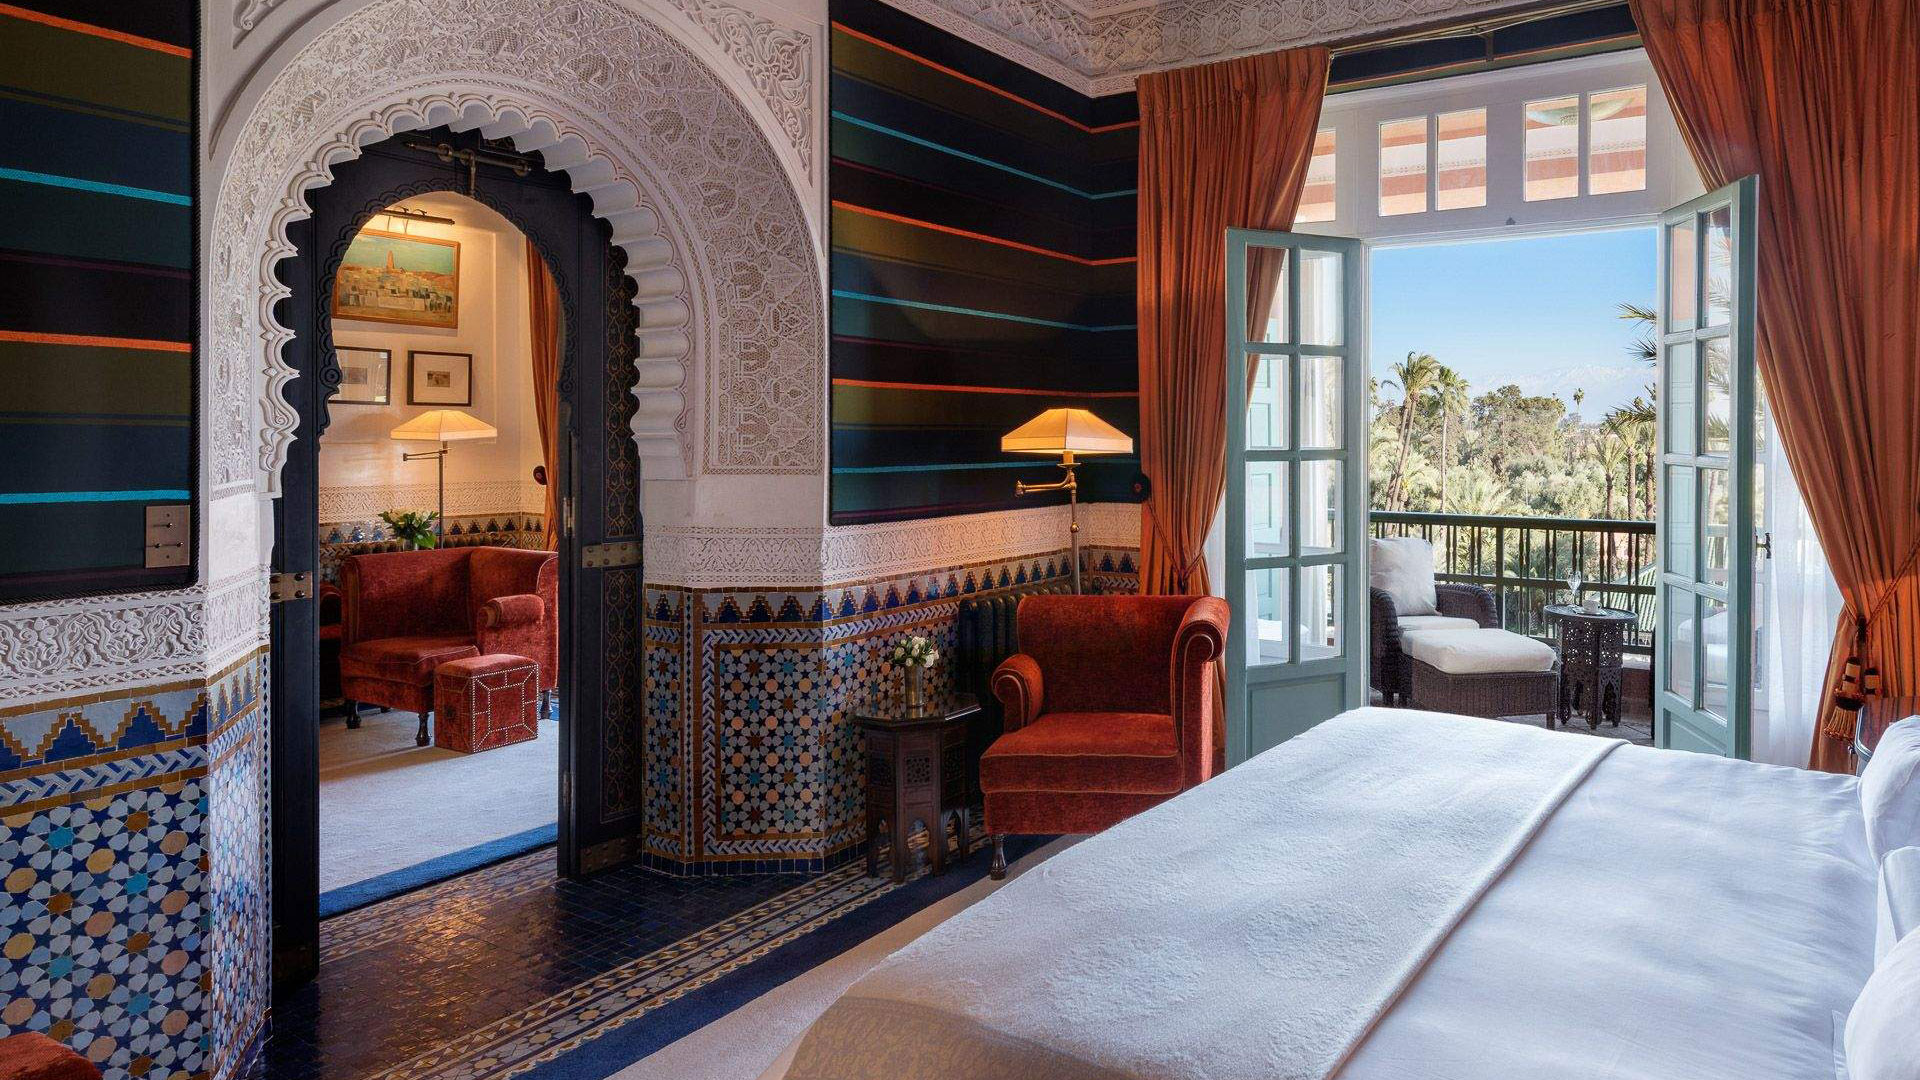 Hôtels du monde: La Mamounia, Maroc